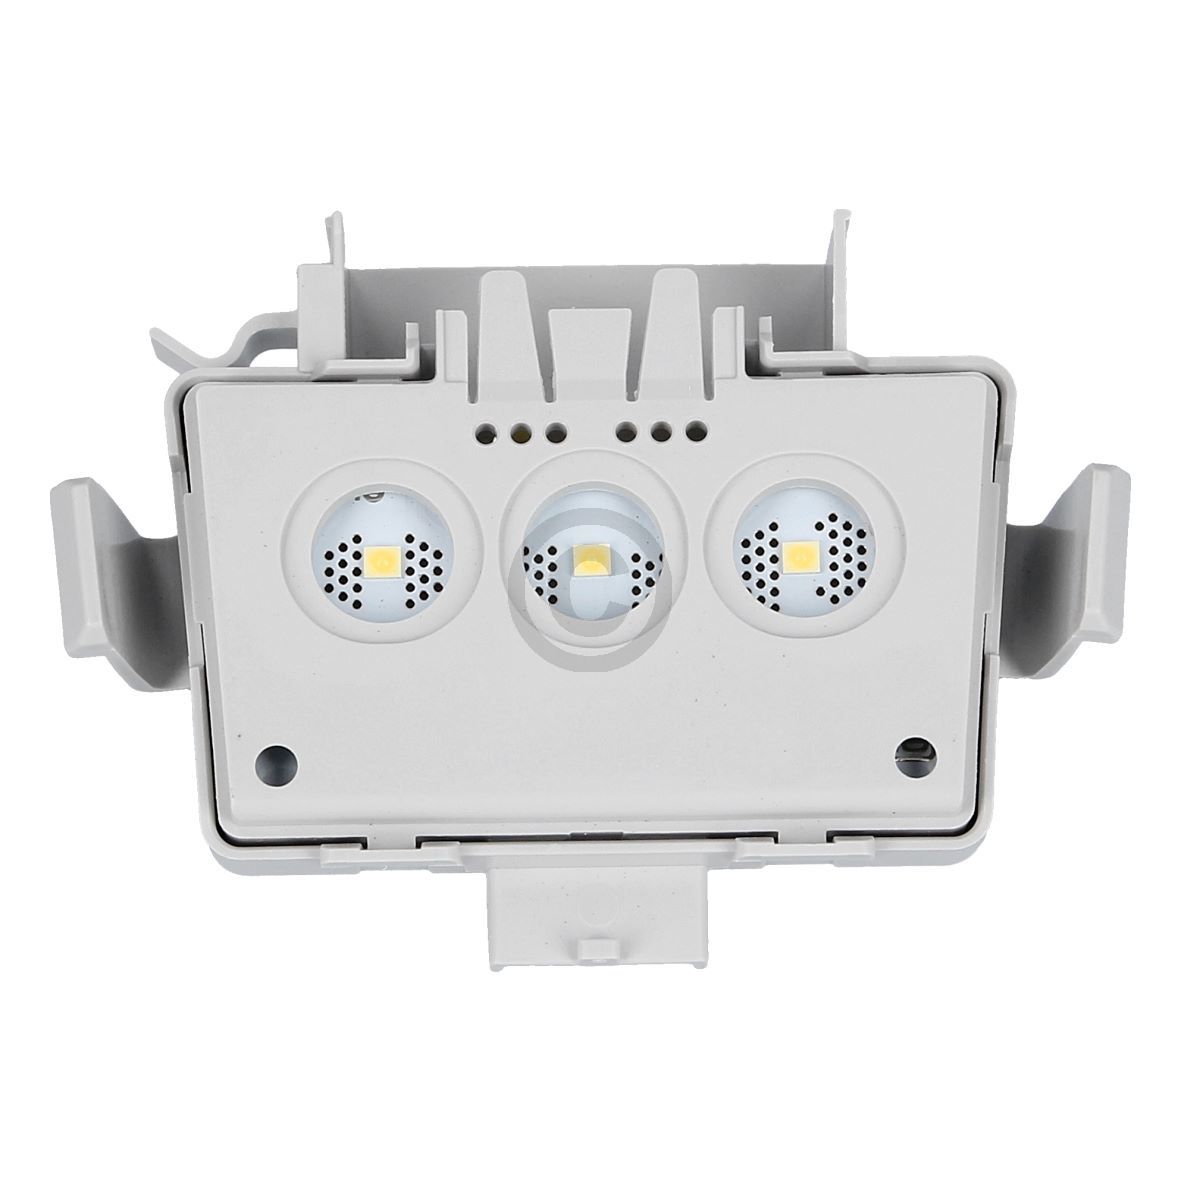 Sensor für Trommelbeleuchtung Miele 10879220 in Trockner (EA-10879220) von Miele